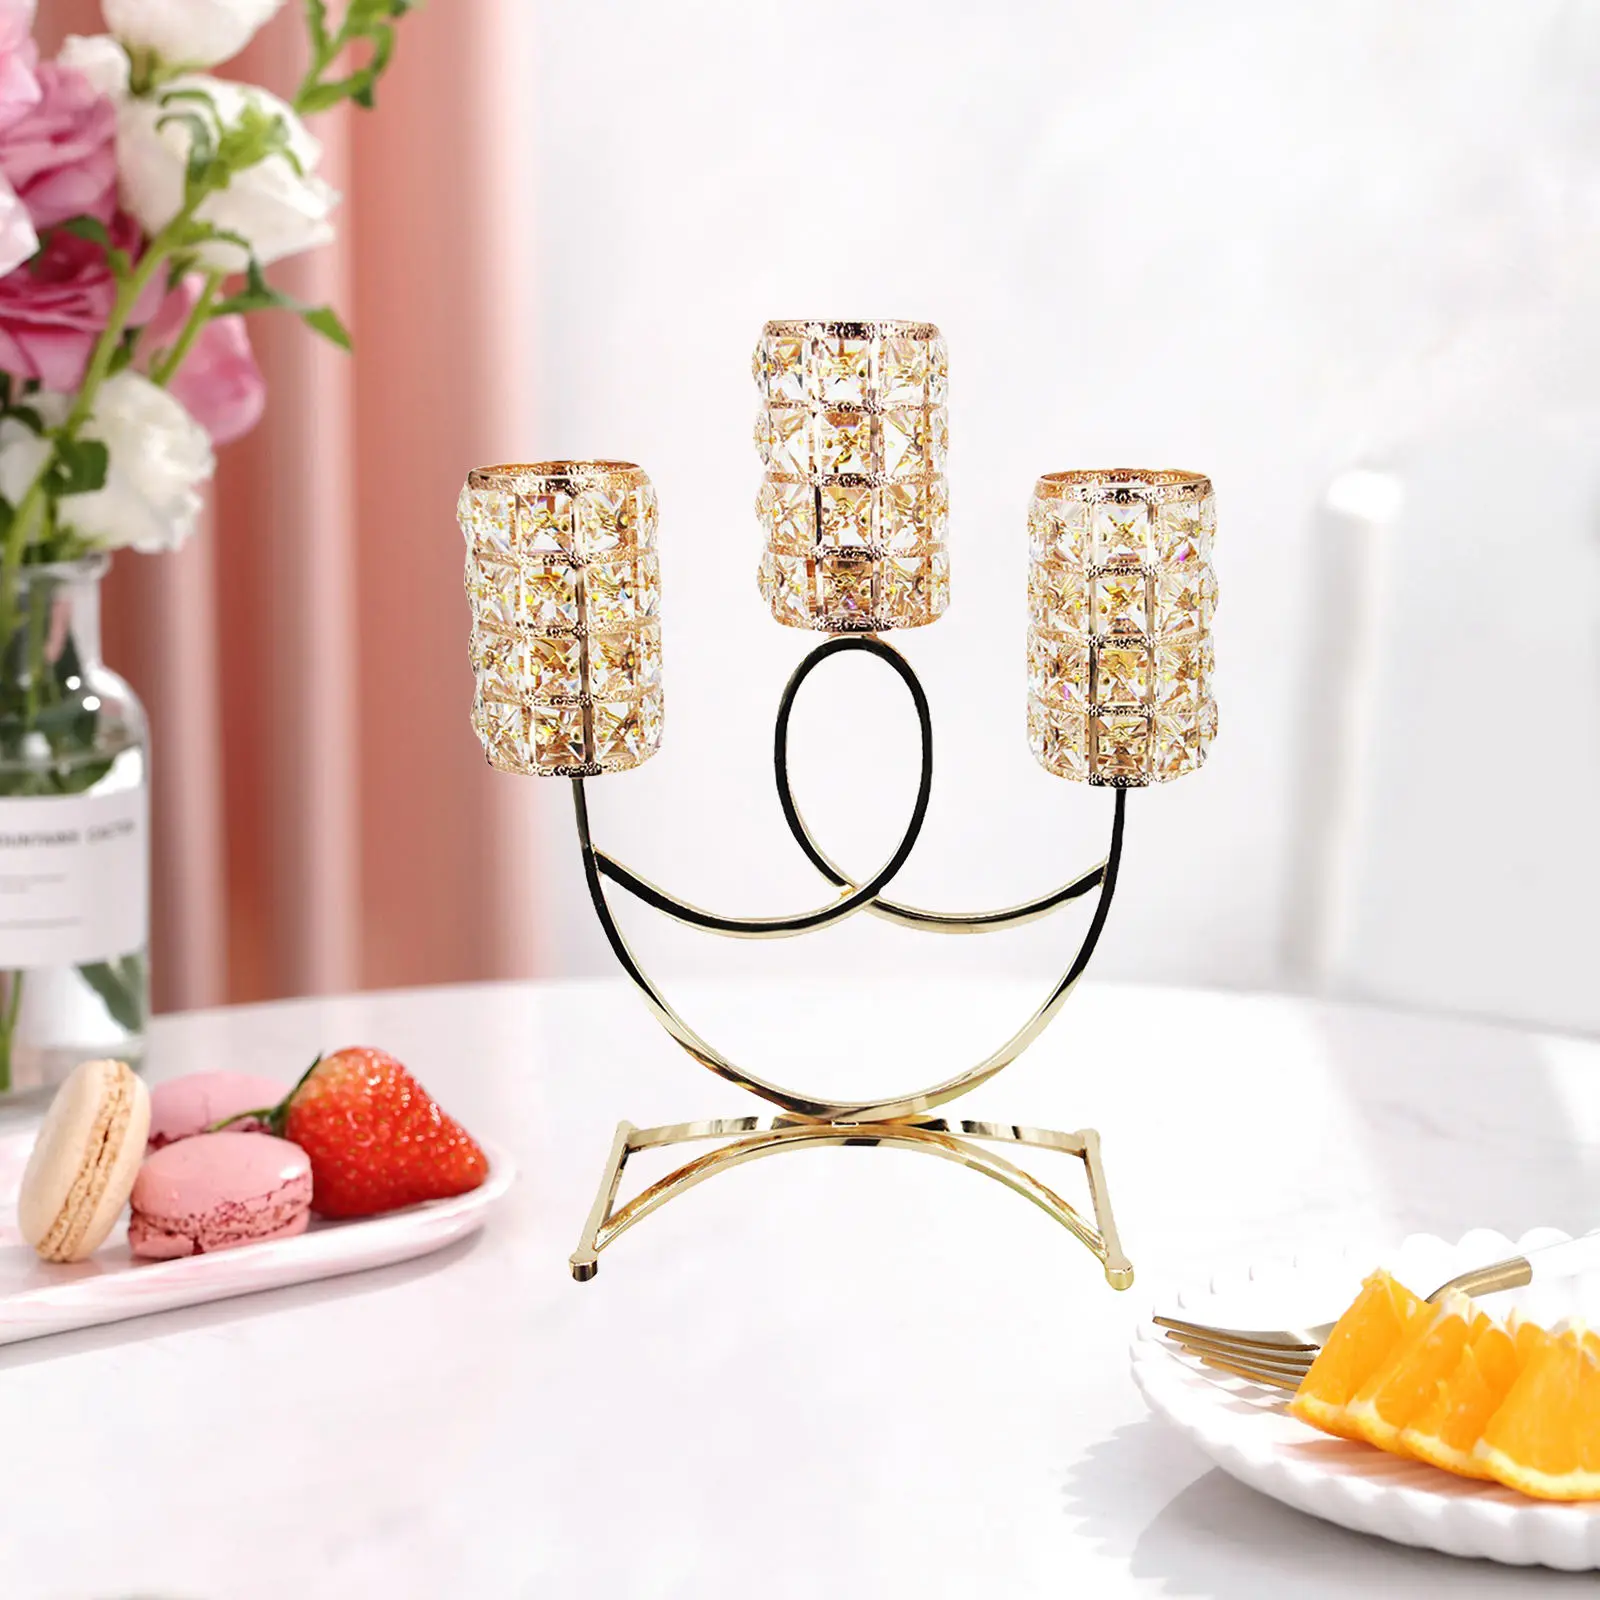 Decorative Golden Crystal Candle Holders Tea Light Candlestick with 3 Candelabras for Dinning Room